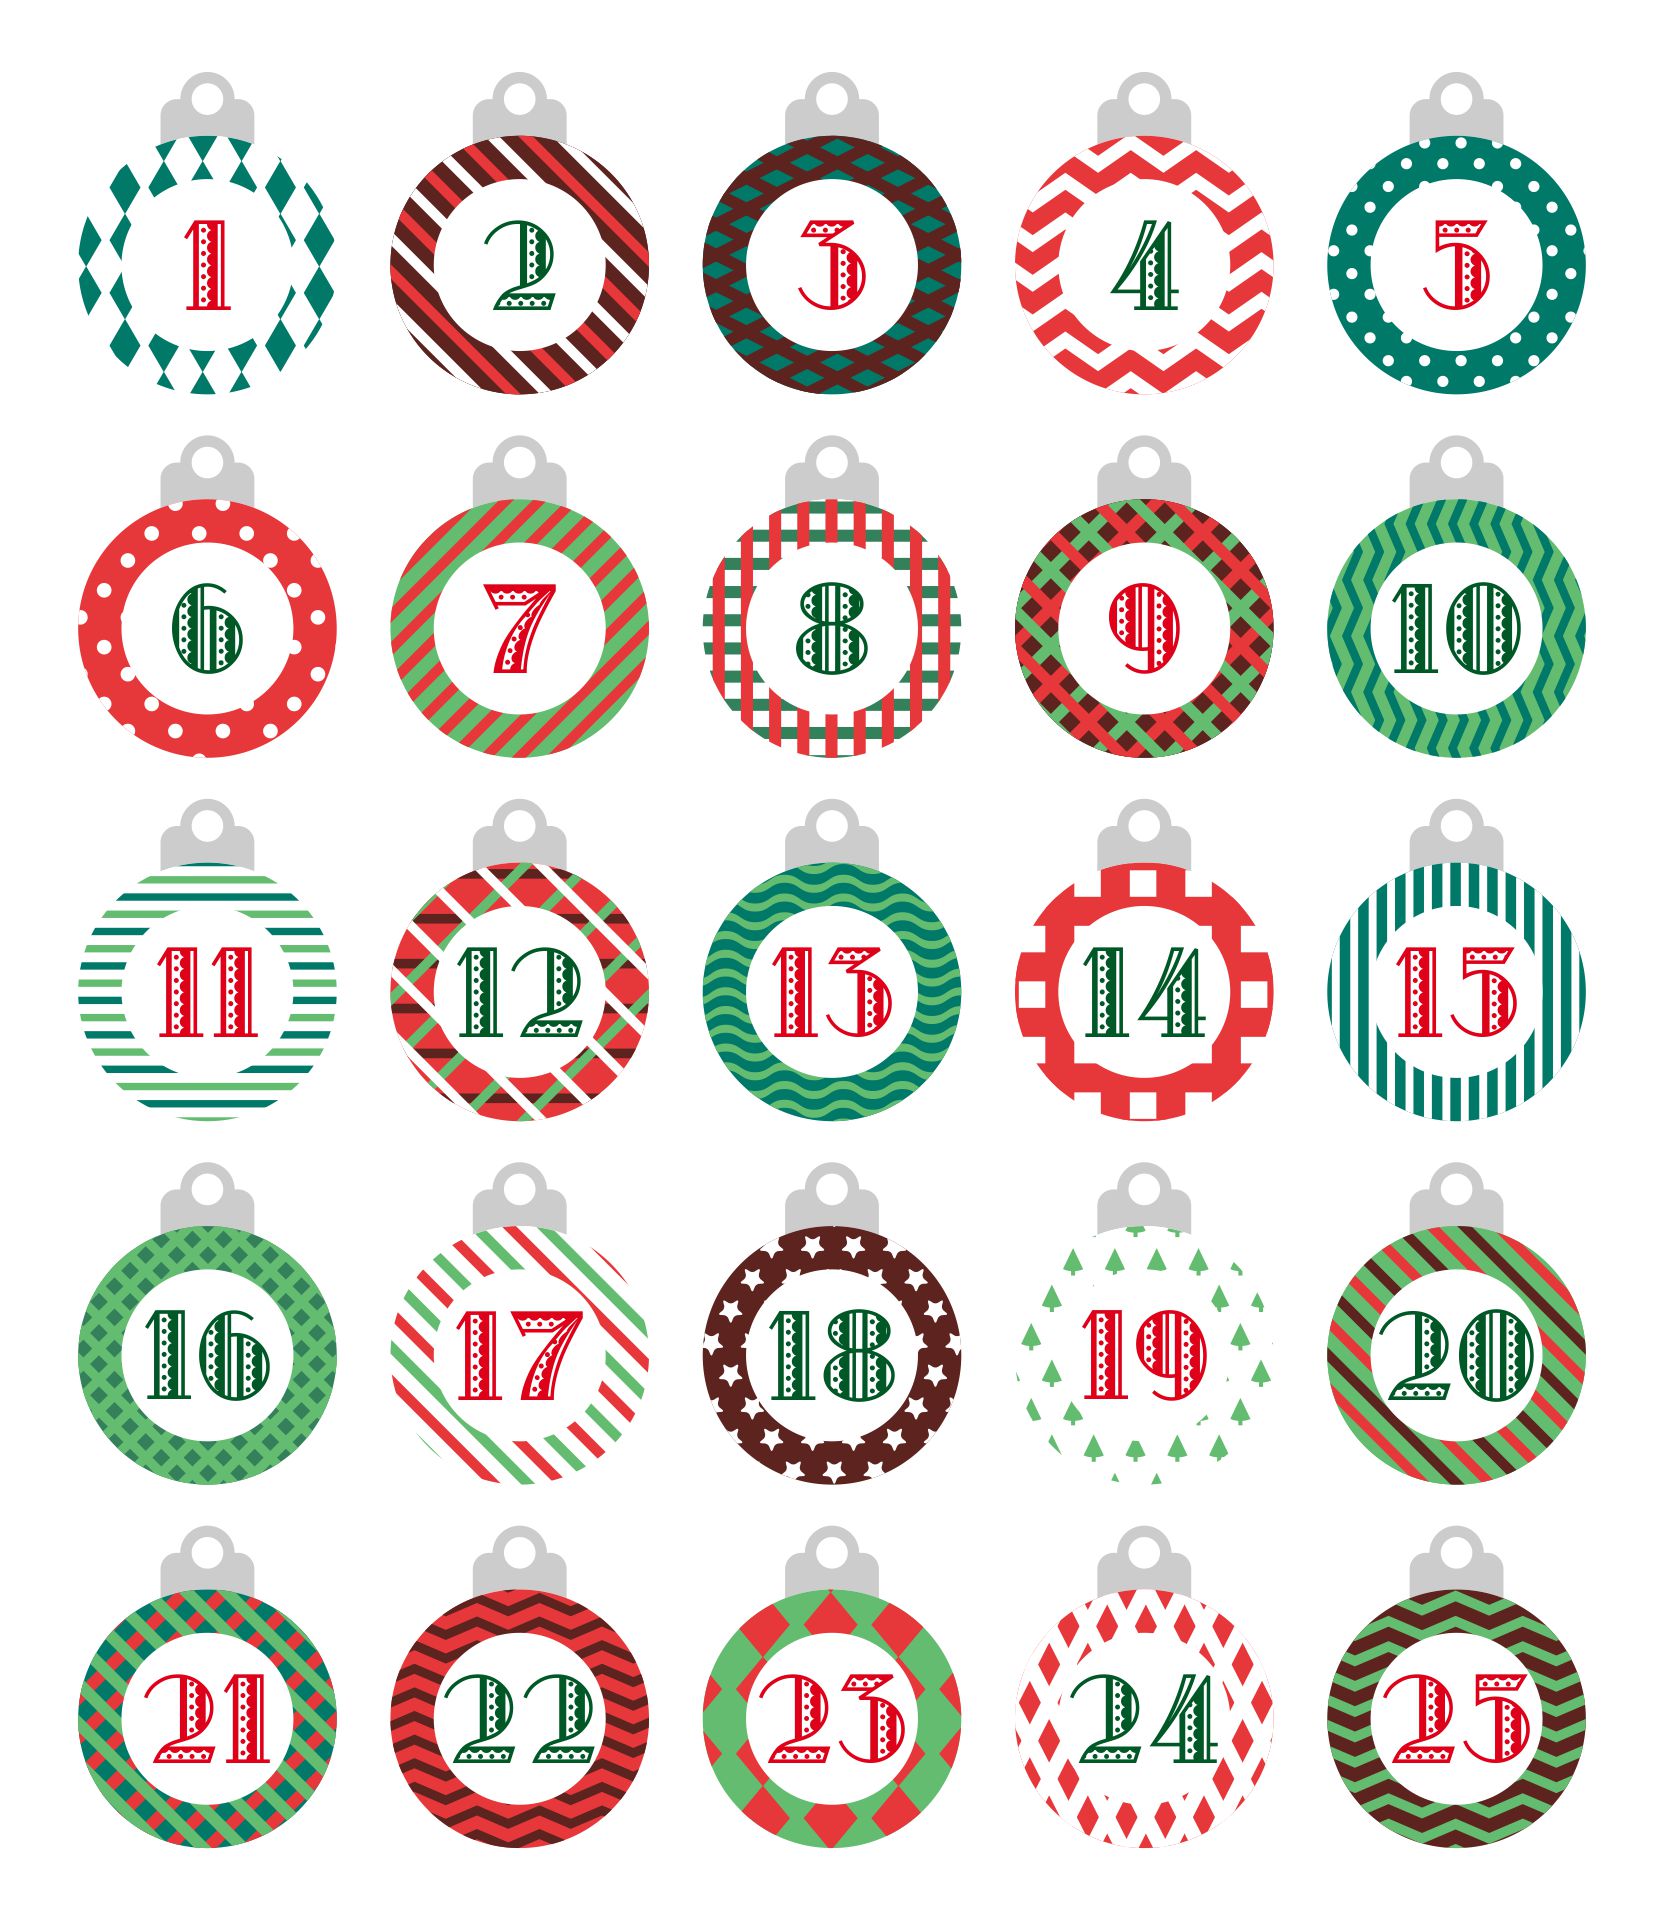 Printable Christmas Advent Calendar Numbers